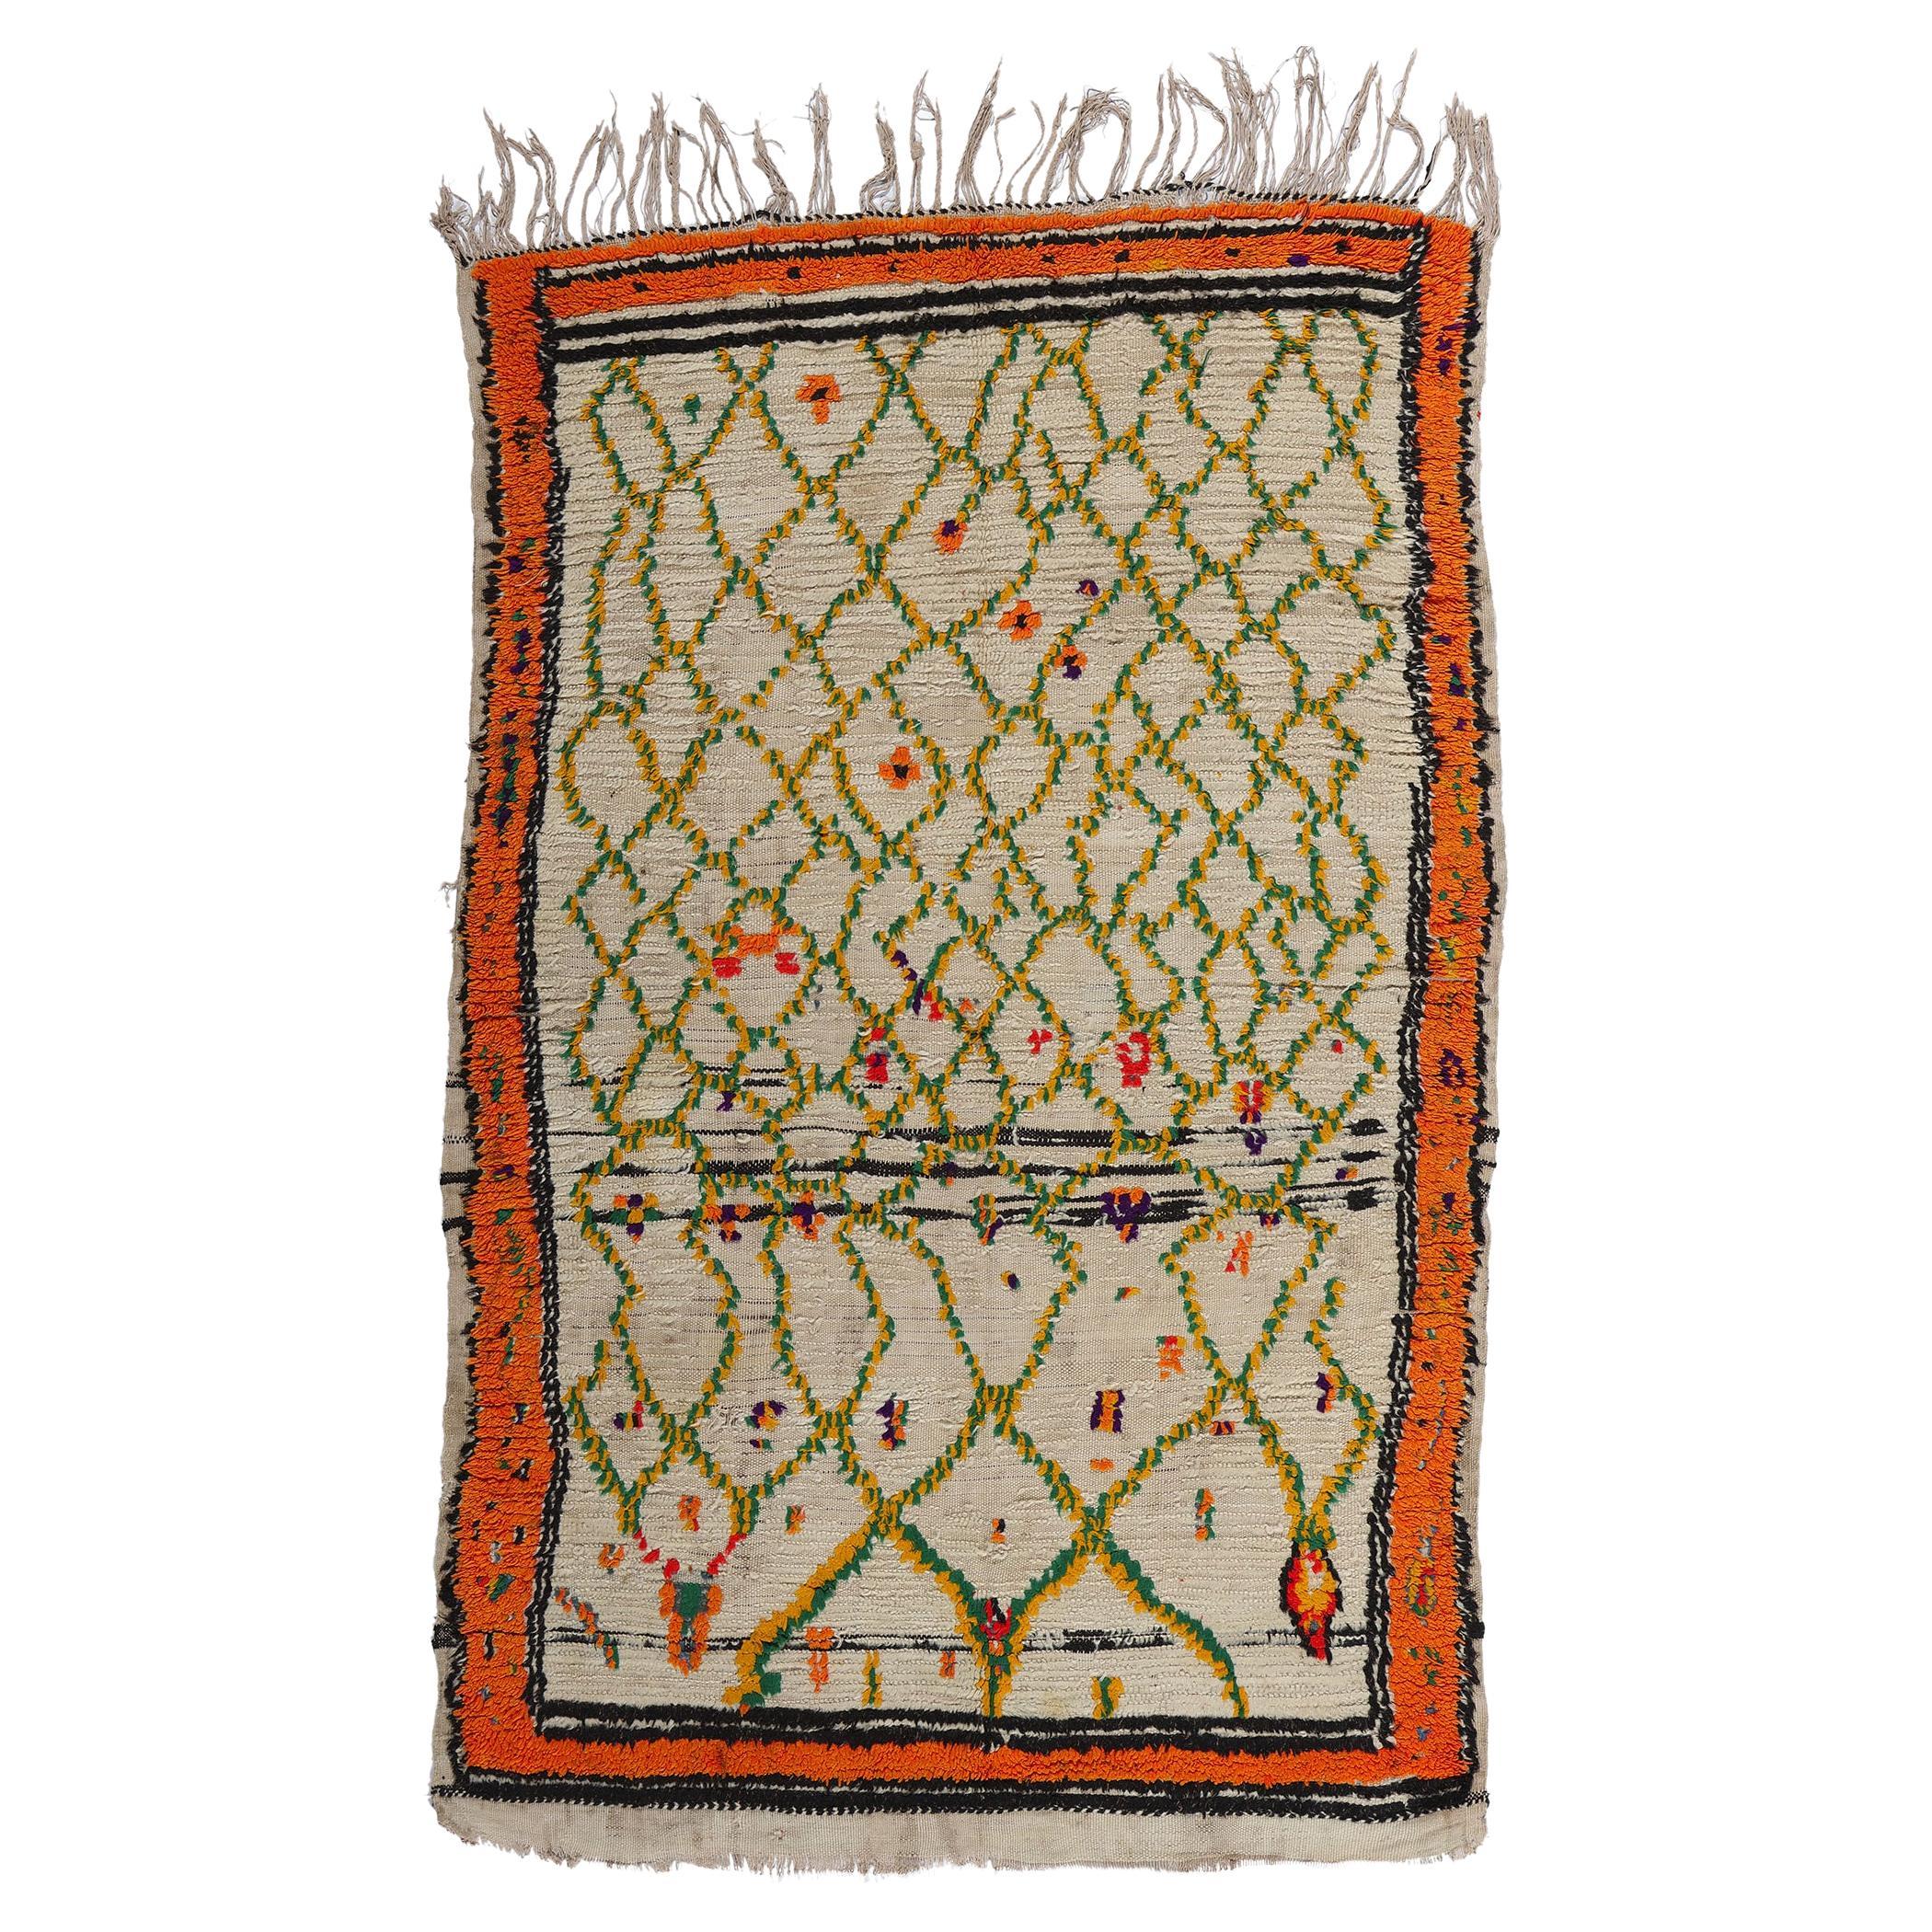 Marokkanischer Azilal-Teppich aus Berber, Cozy Boho Chic Meets Stammeskunst-Enchantment, Vintage